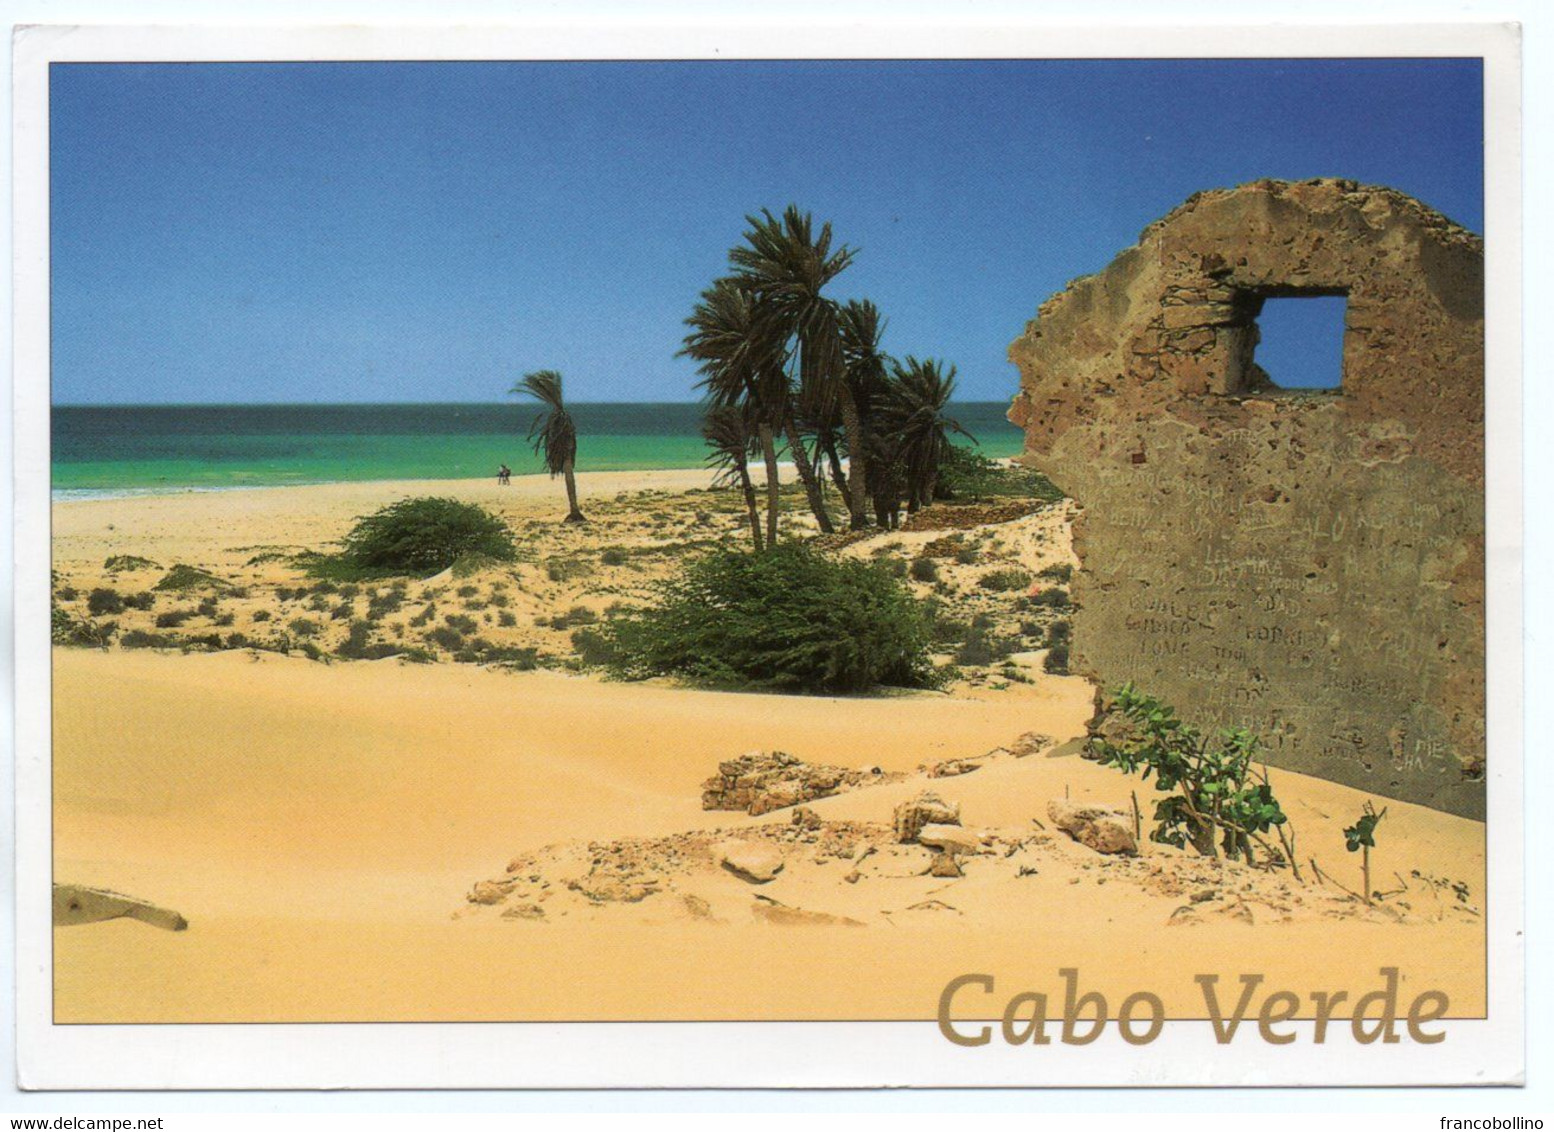 CABO VERDE/CAP VERT - BOAVISTA ISLAND / CHAVE BEACH / THEMATIC STAMP-ECOLOGICAL ENERGY PRODUCTION - Cap Vert